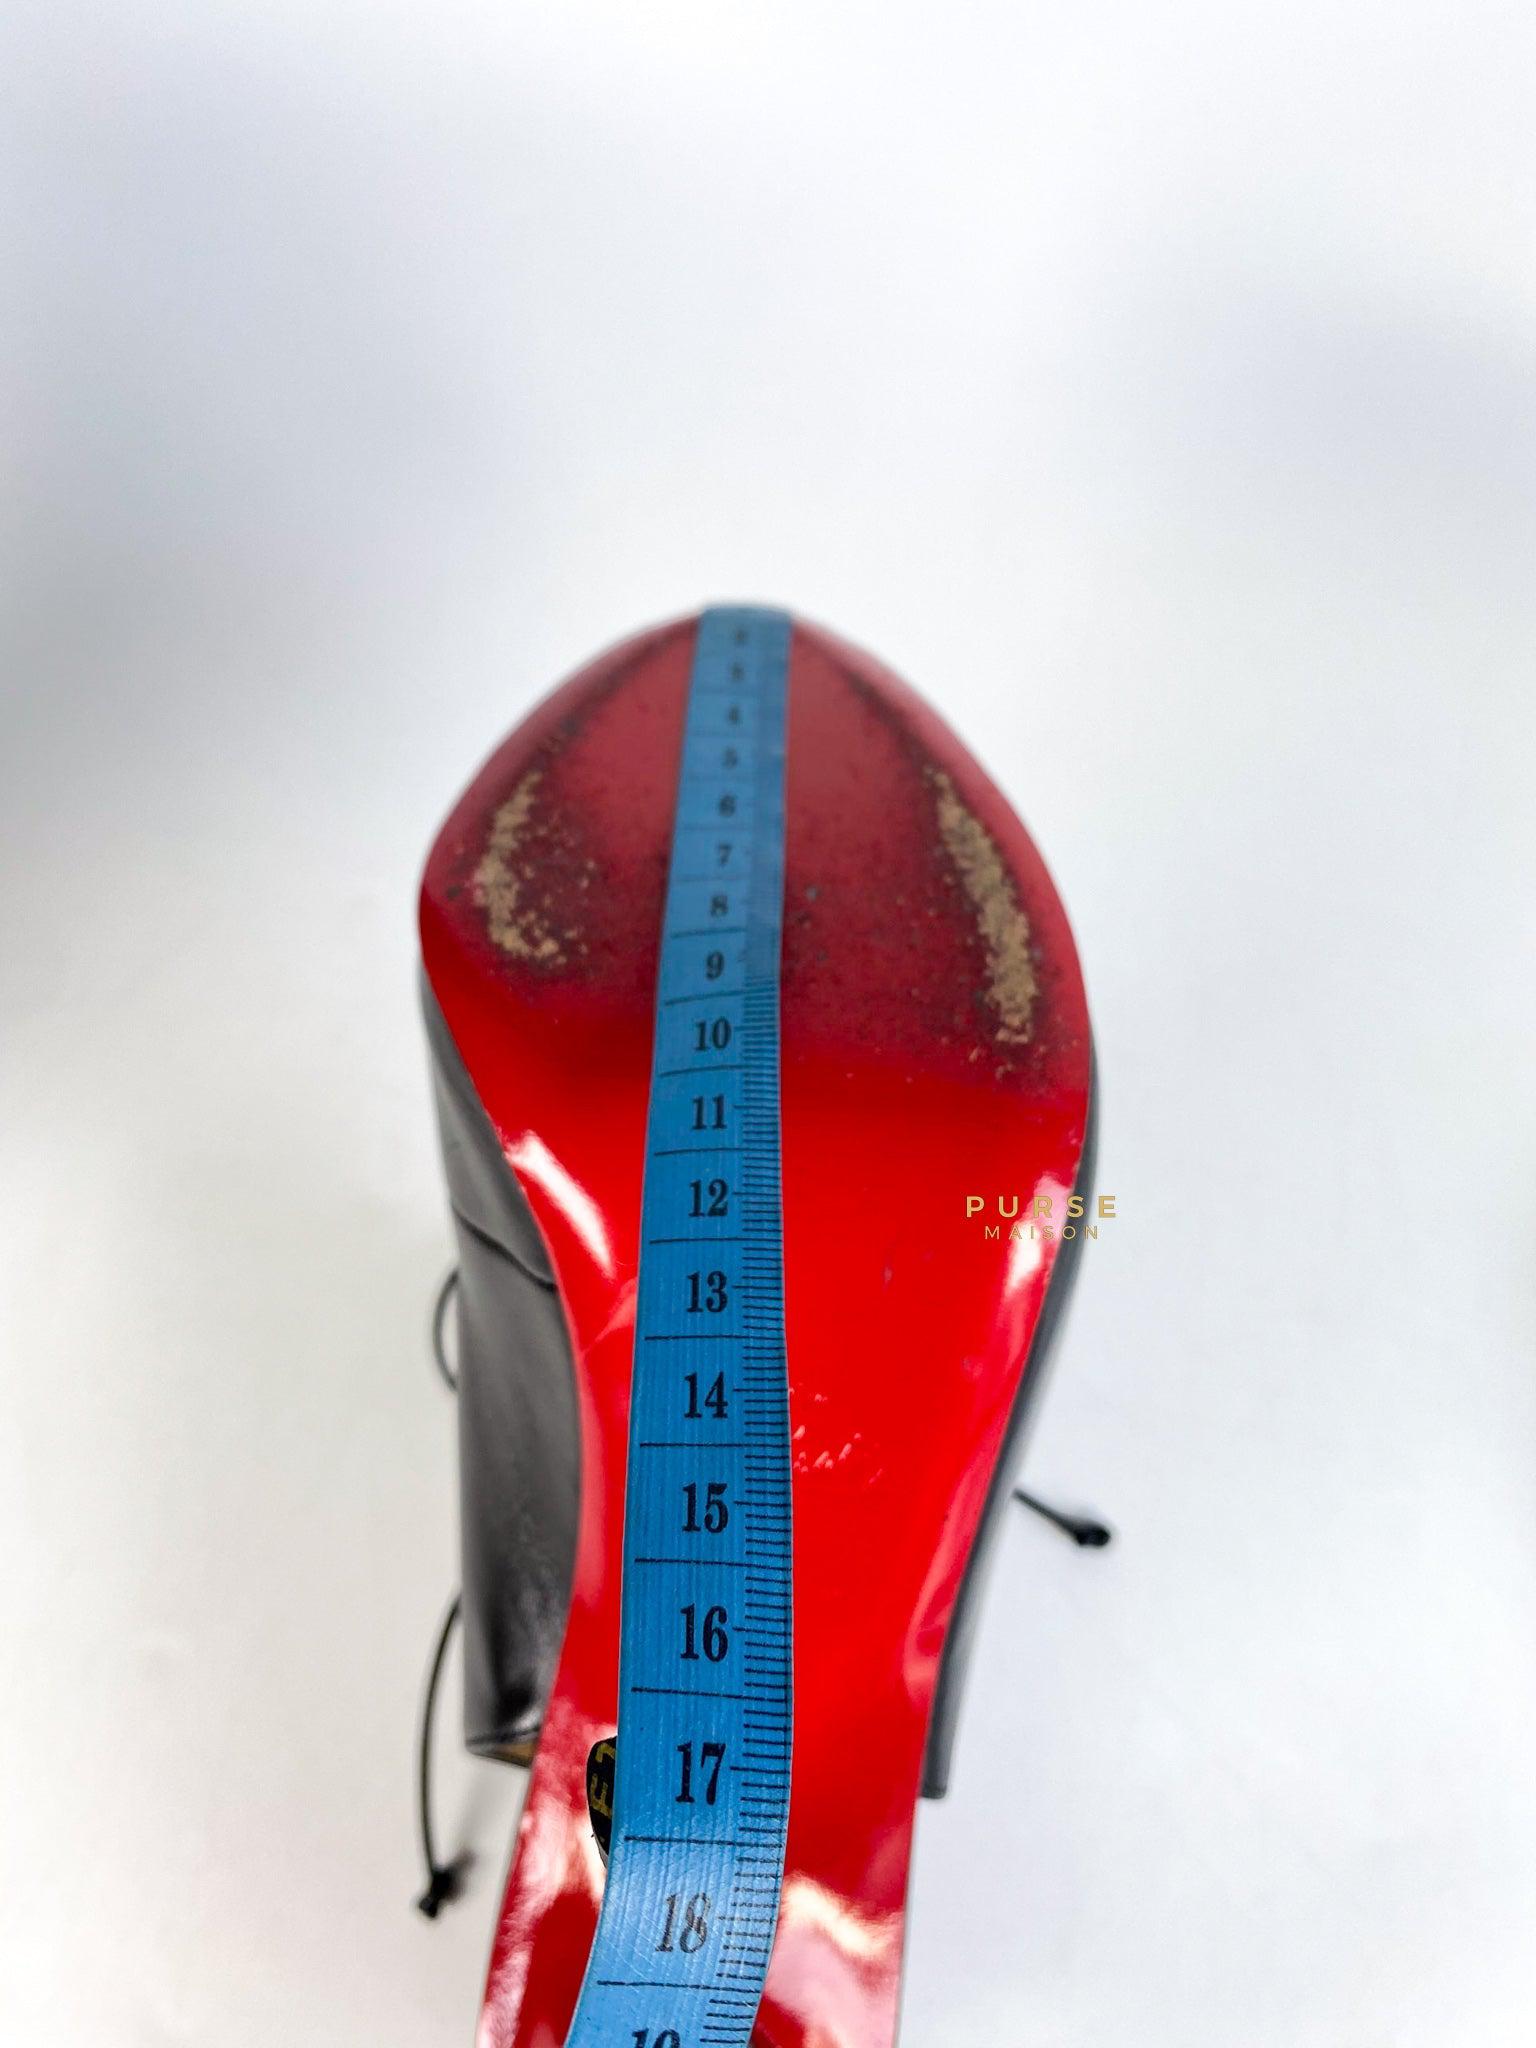 Christian Louboutin Ferme Rouge Cut Out Pointed Toe Pumps Heeled Sandals Size 38 EU (24.5cm)